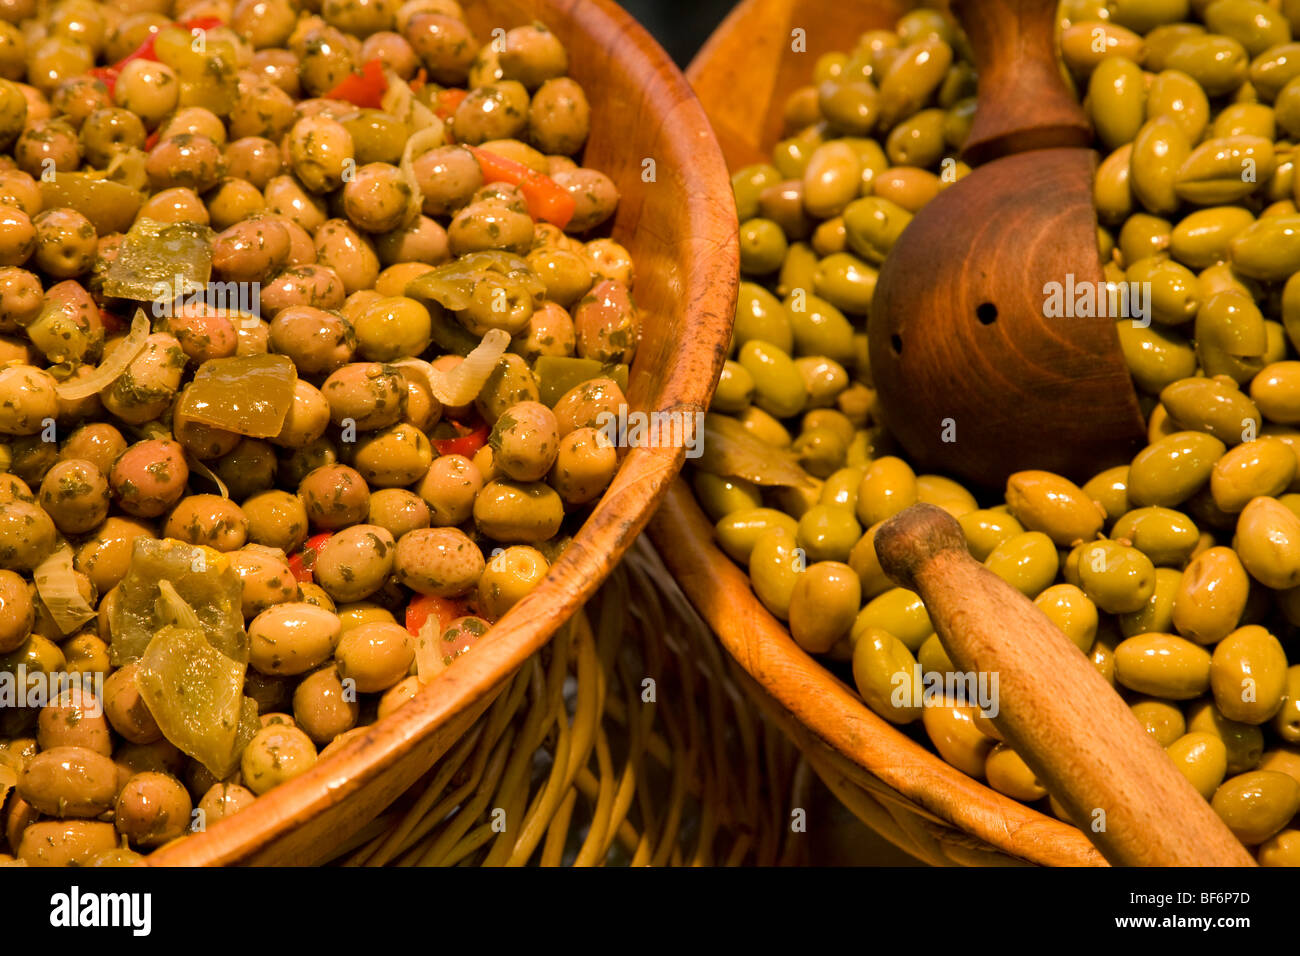 Olives, marché provençal, Mars, Antibes, Cote d Azur, Provence, France Banque D'Images